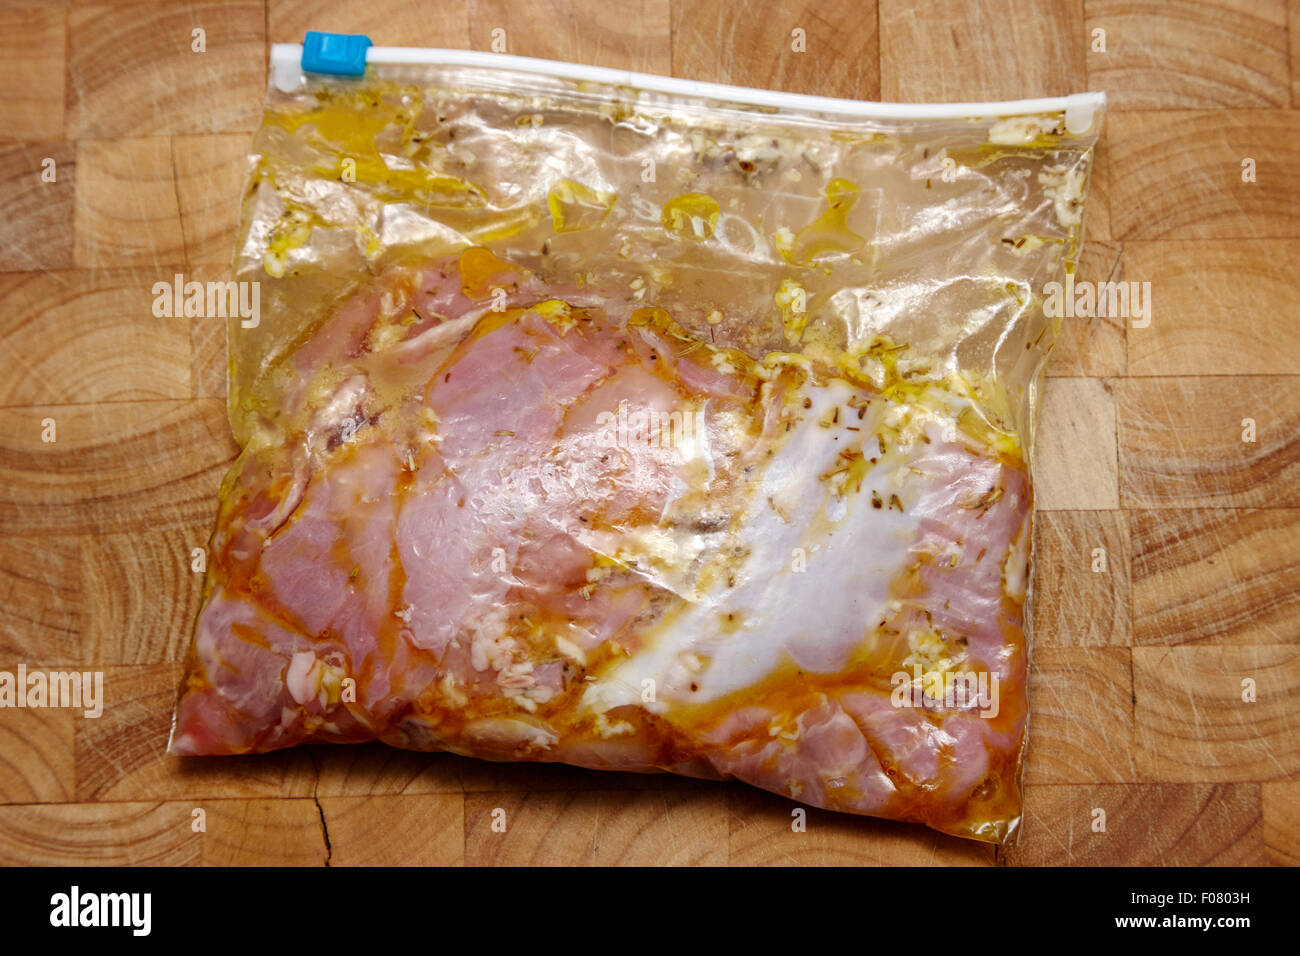 https://c8.alamy.com/comp/F0803H/marinating-meat-in-a-sauce-using-a-ziploc-bag-F0803H.jpg